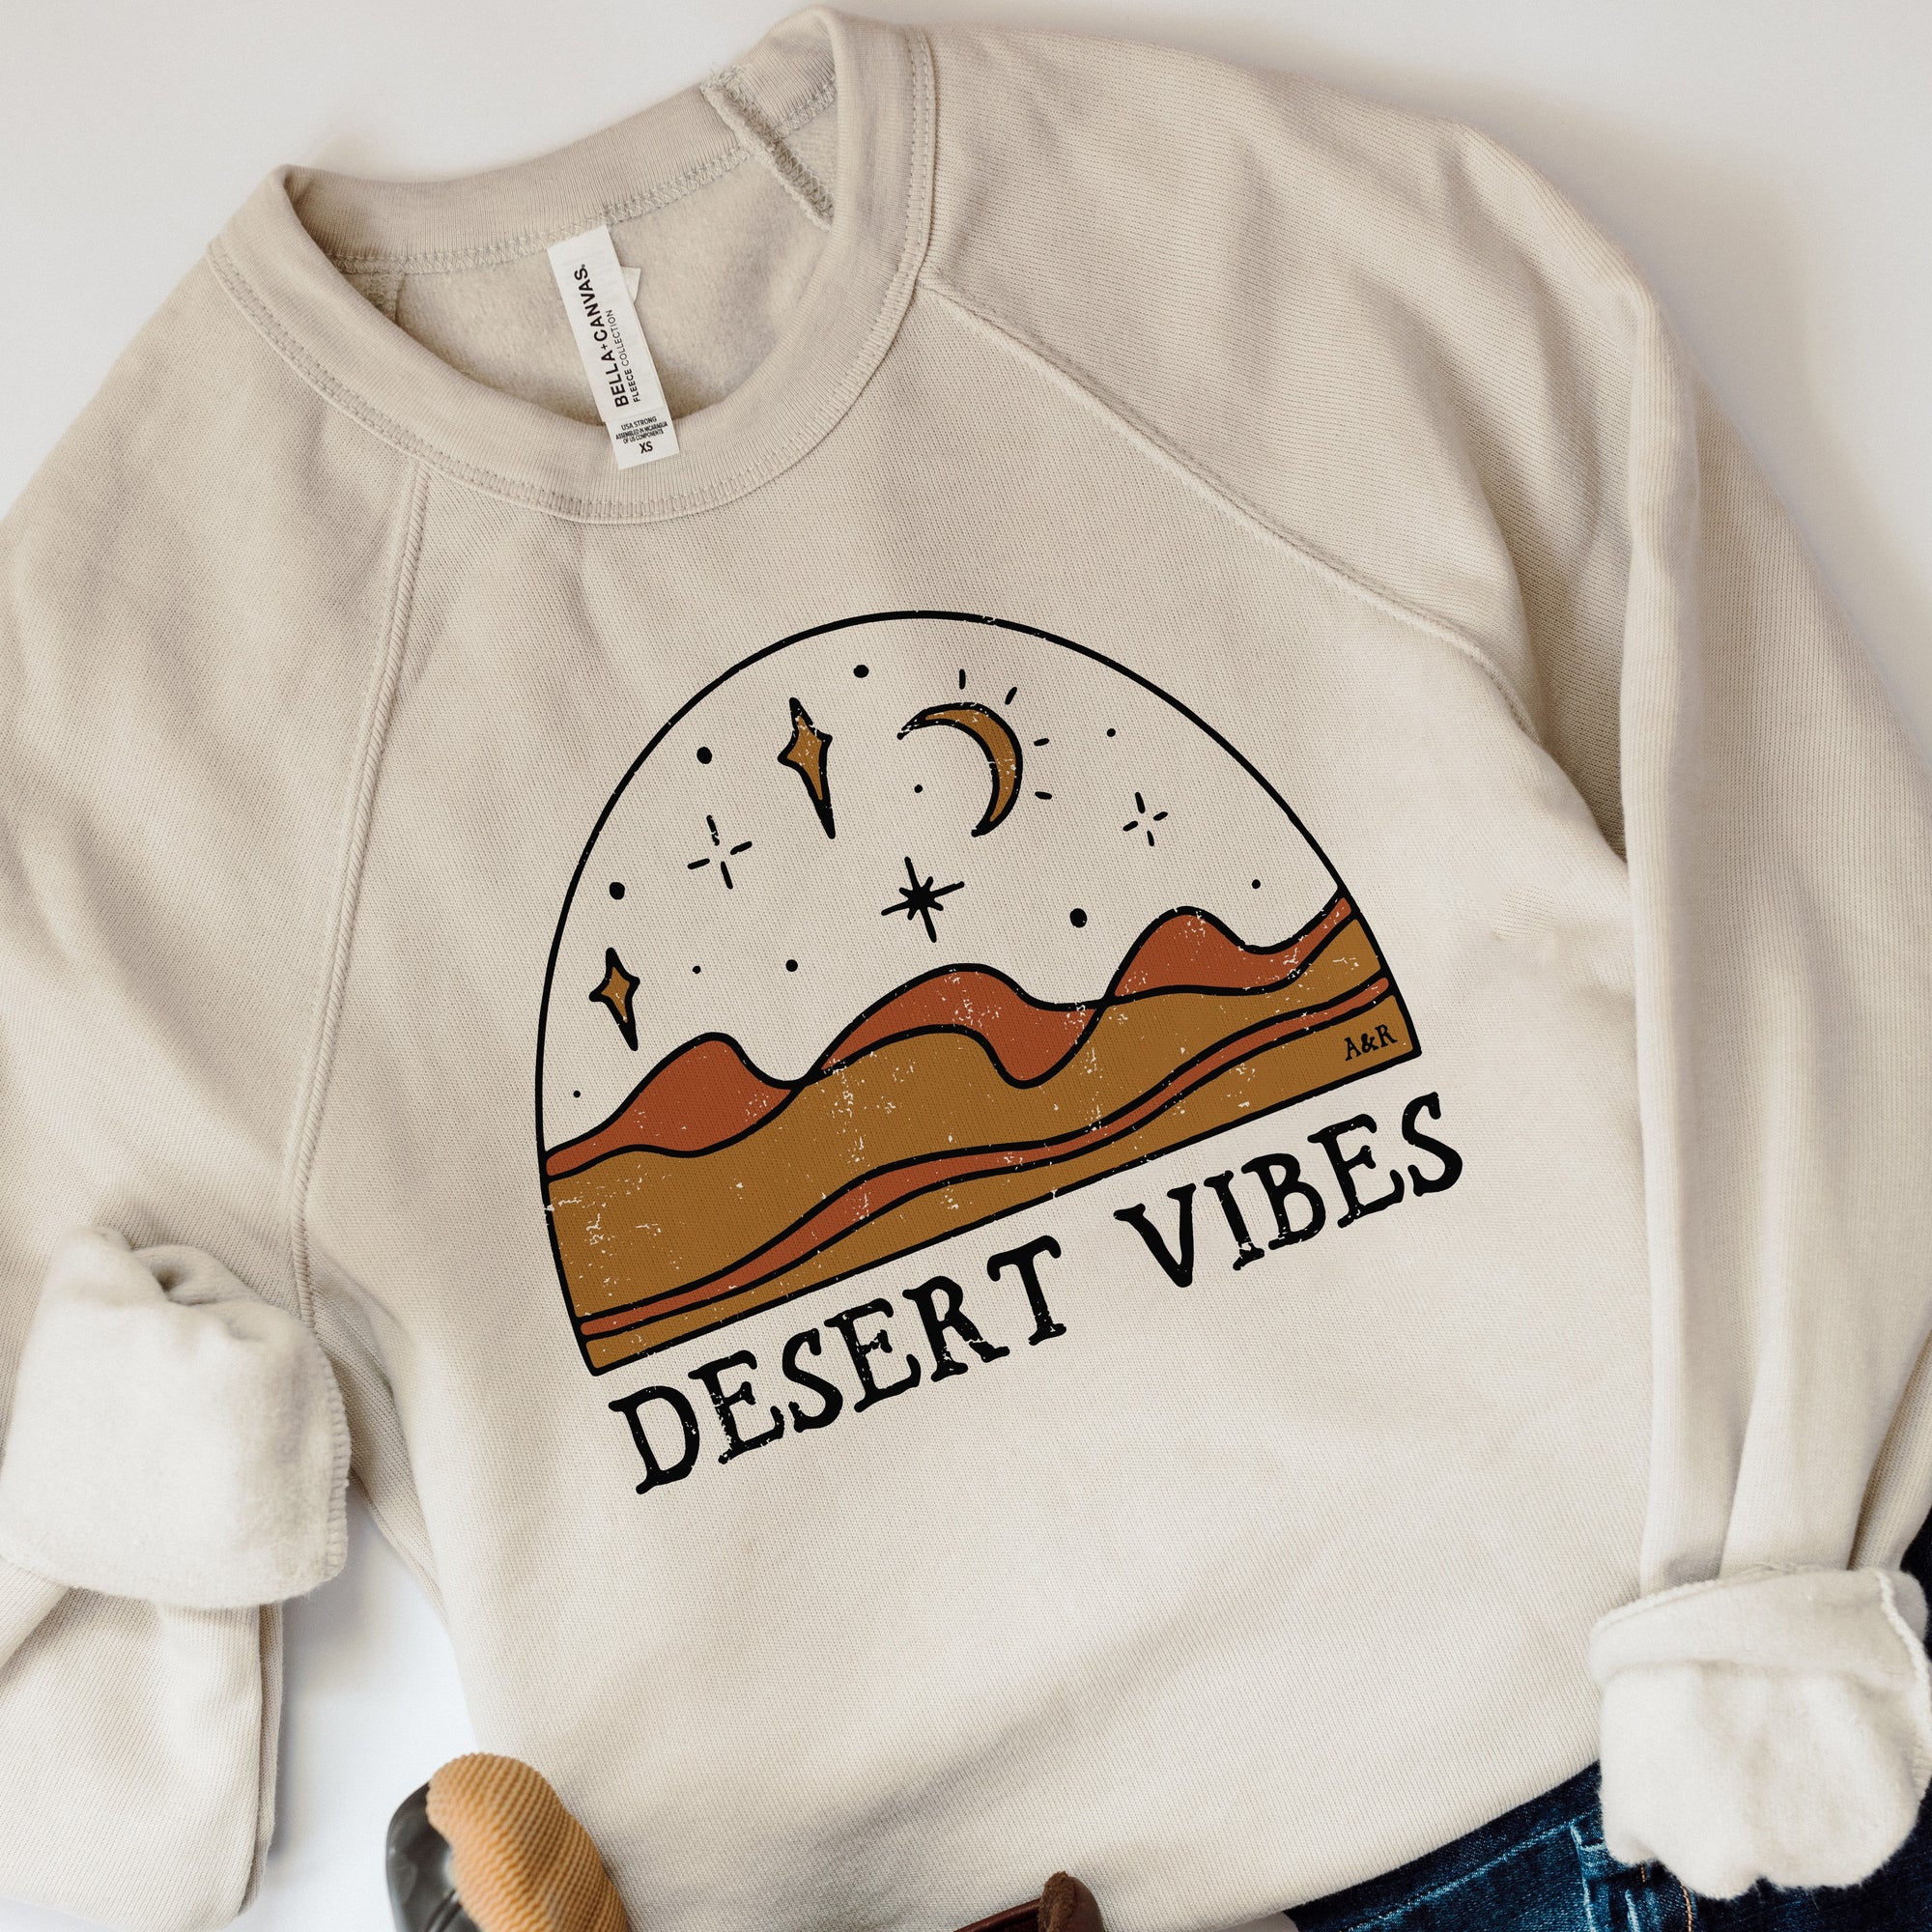 Desert Vibes Sweatshirt (Wholesale)